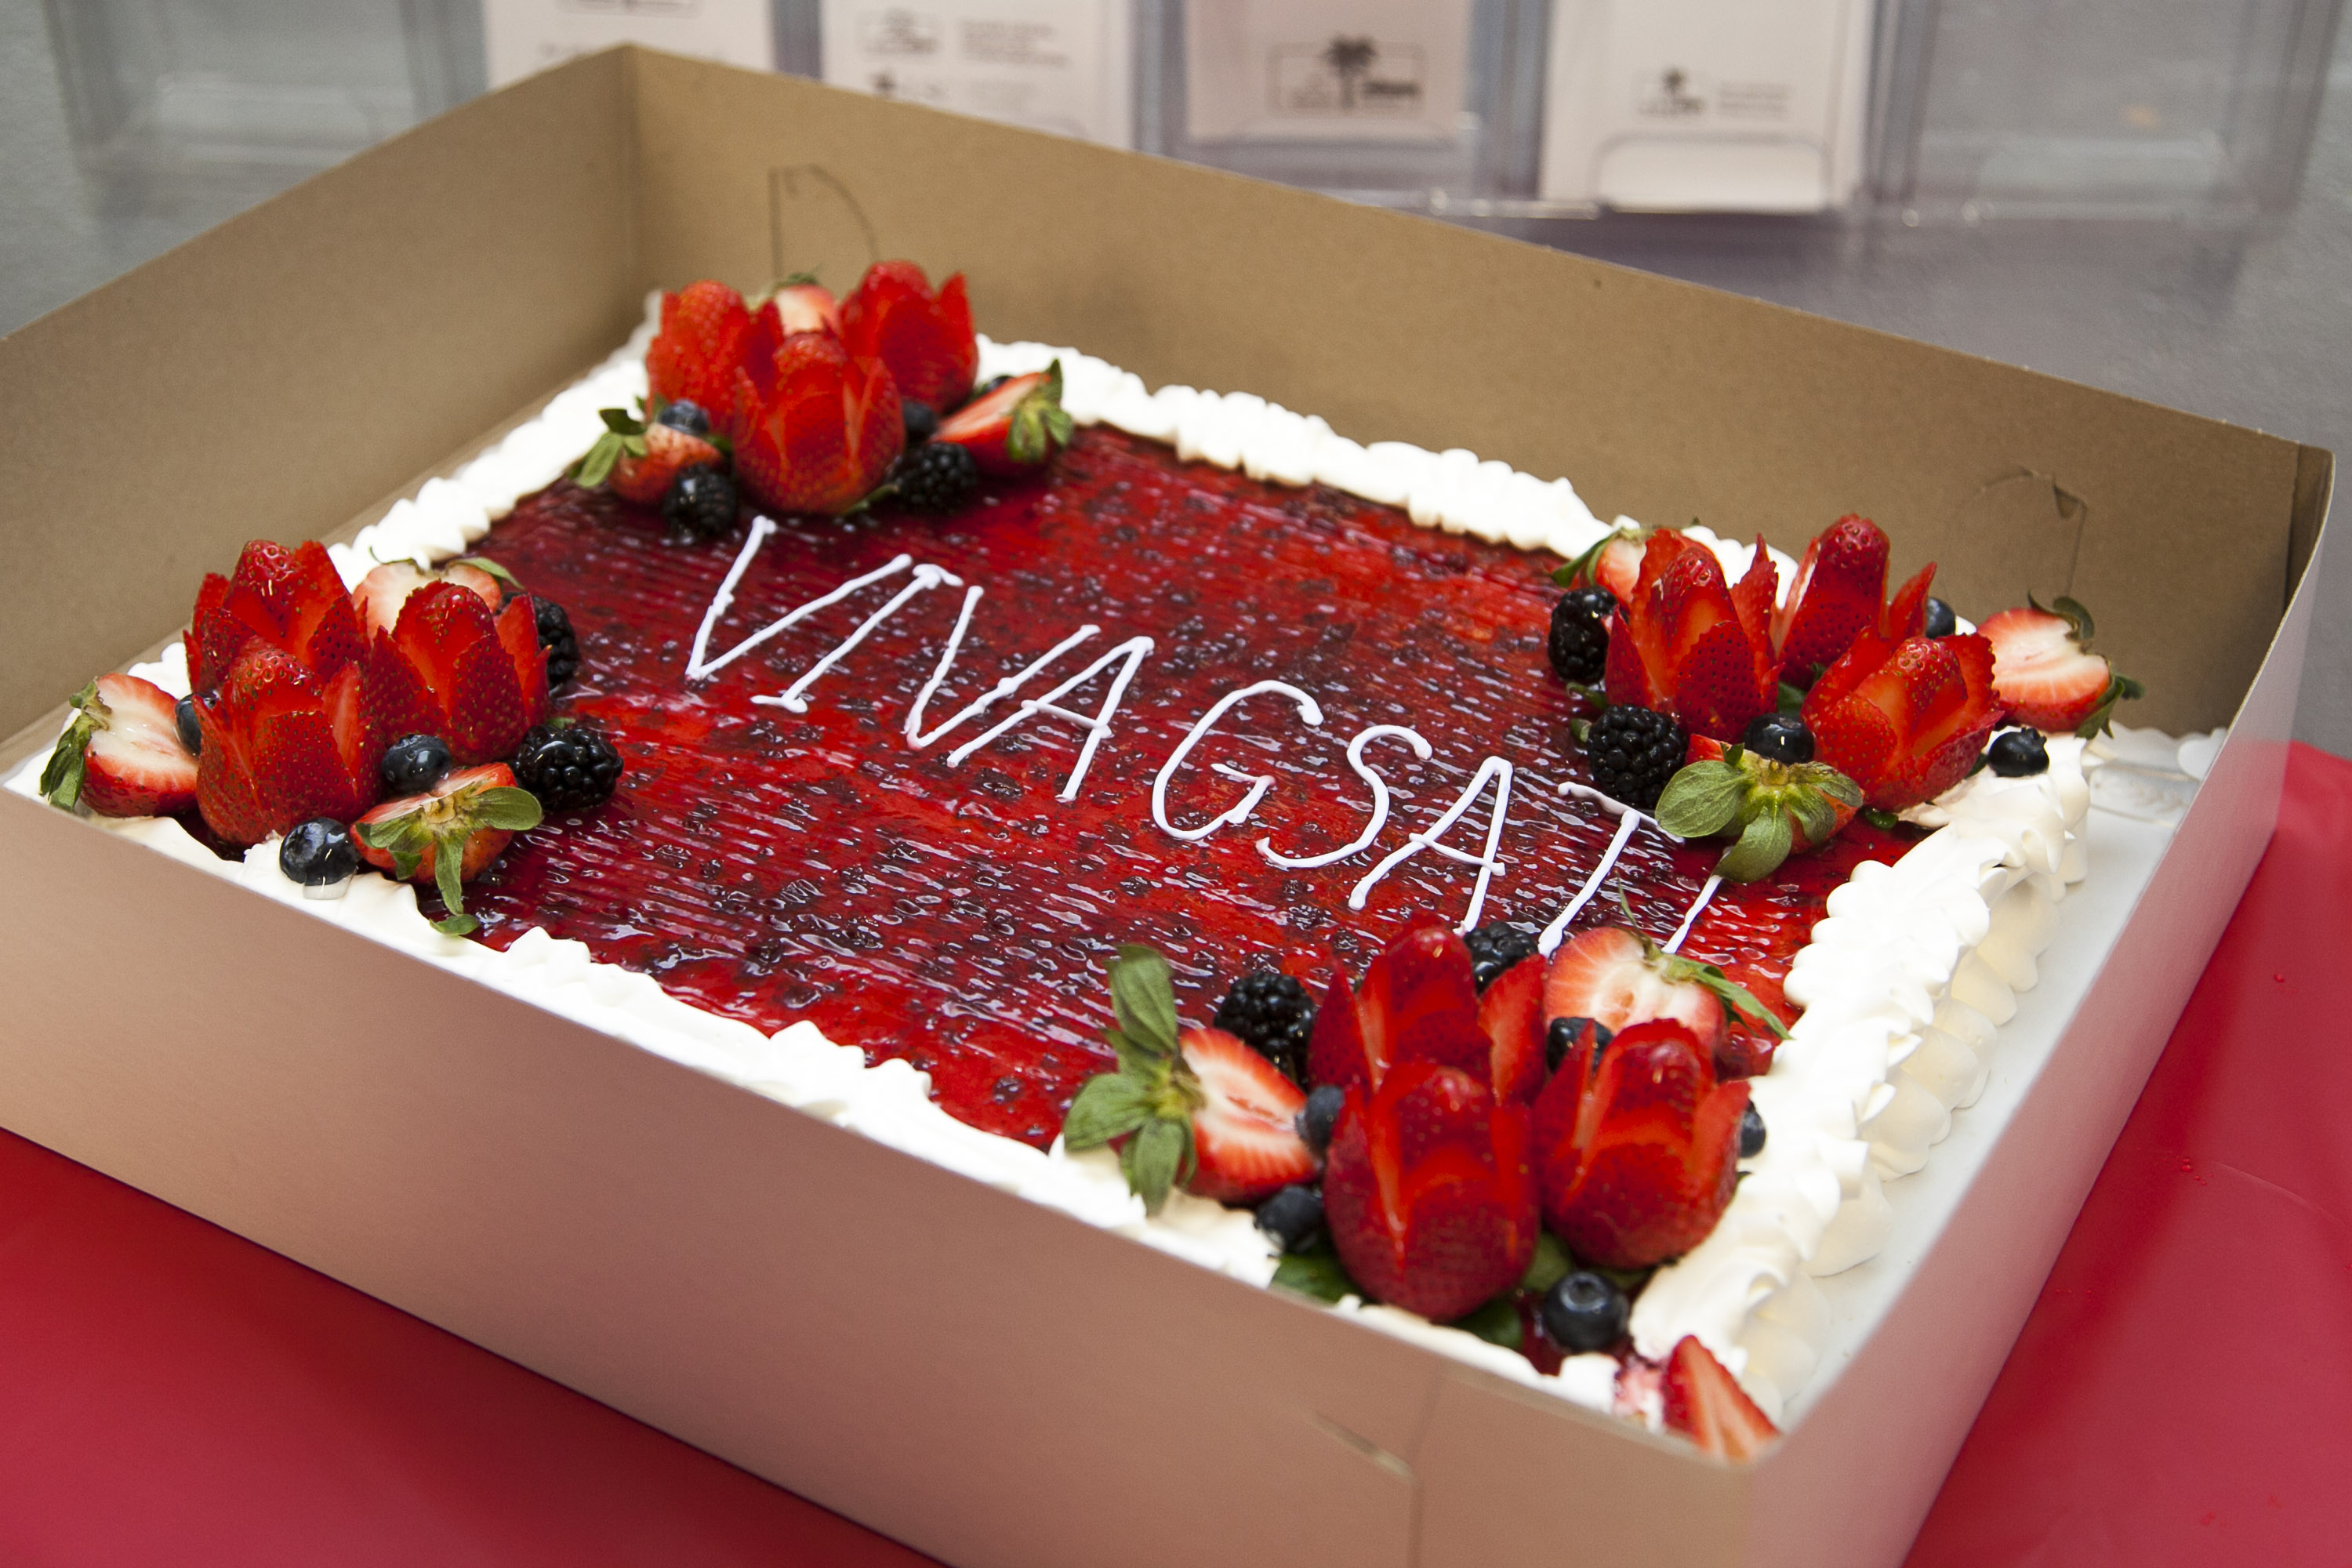 Rectangle strawberry cheesecake that reads "Viva GSAT!"